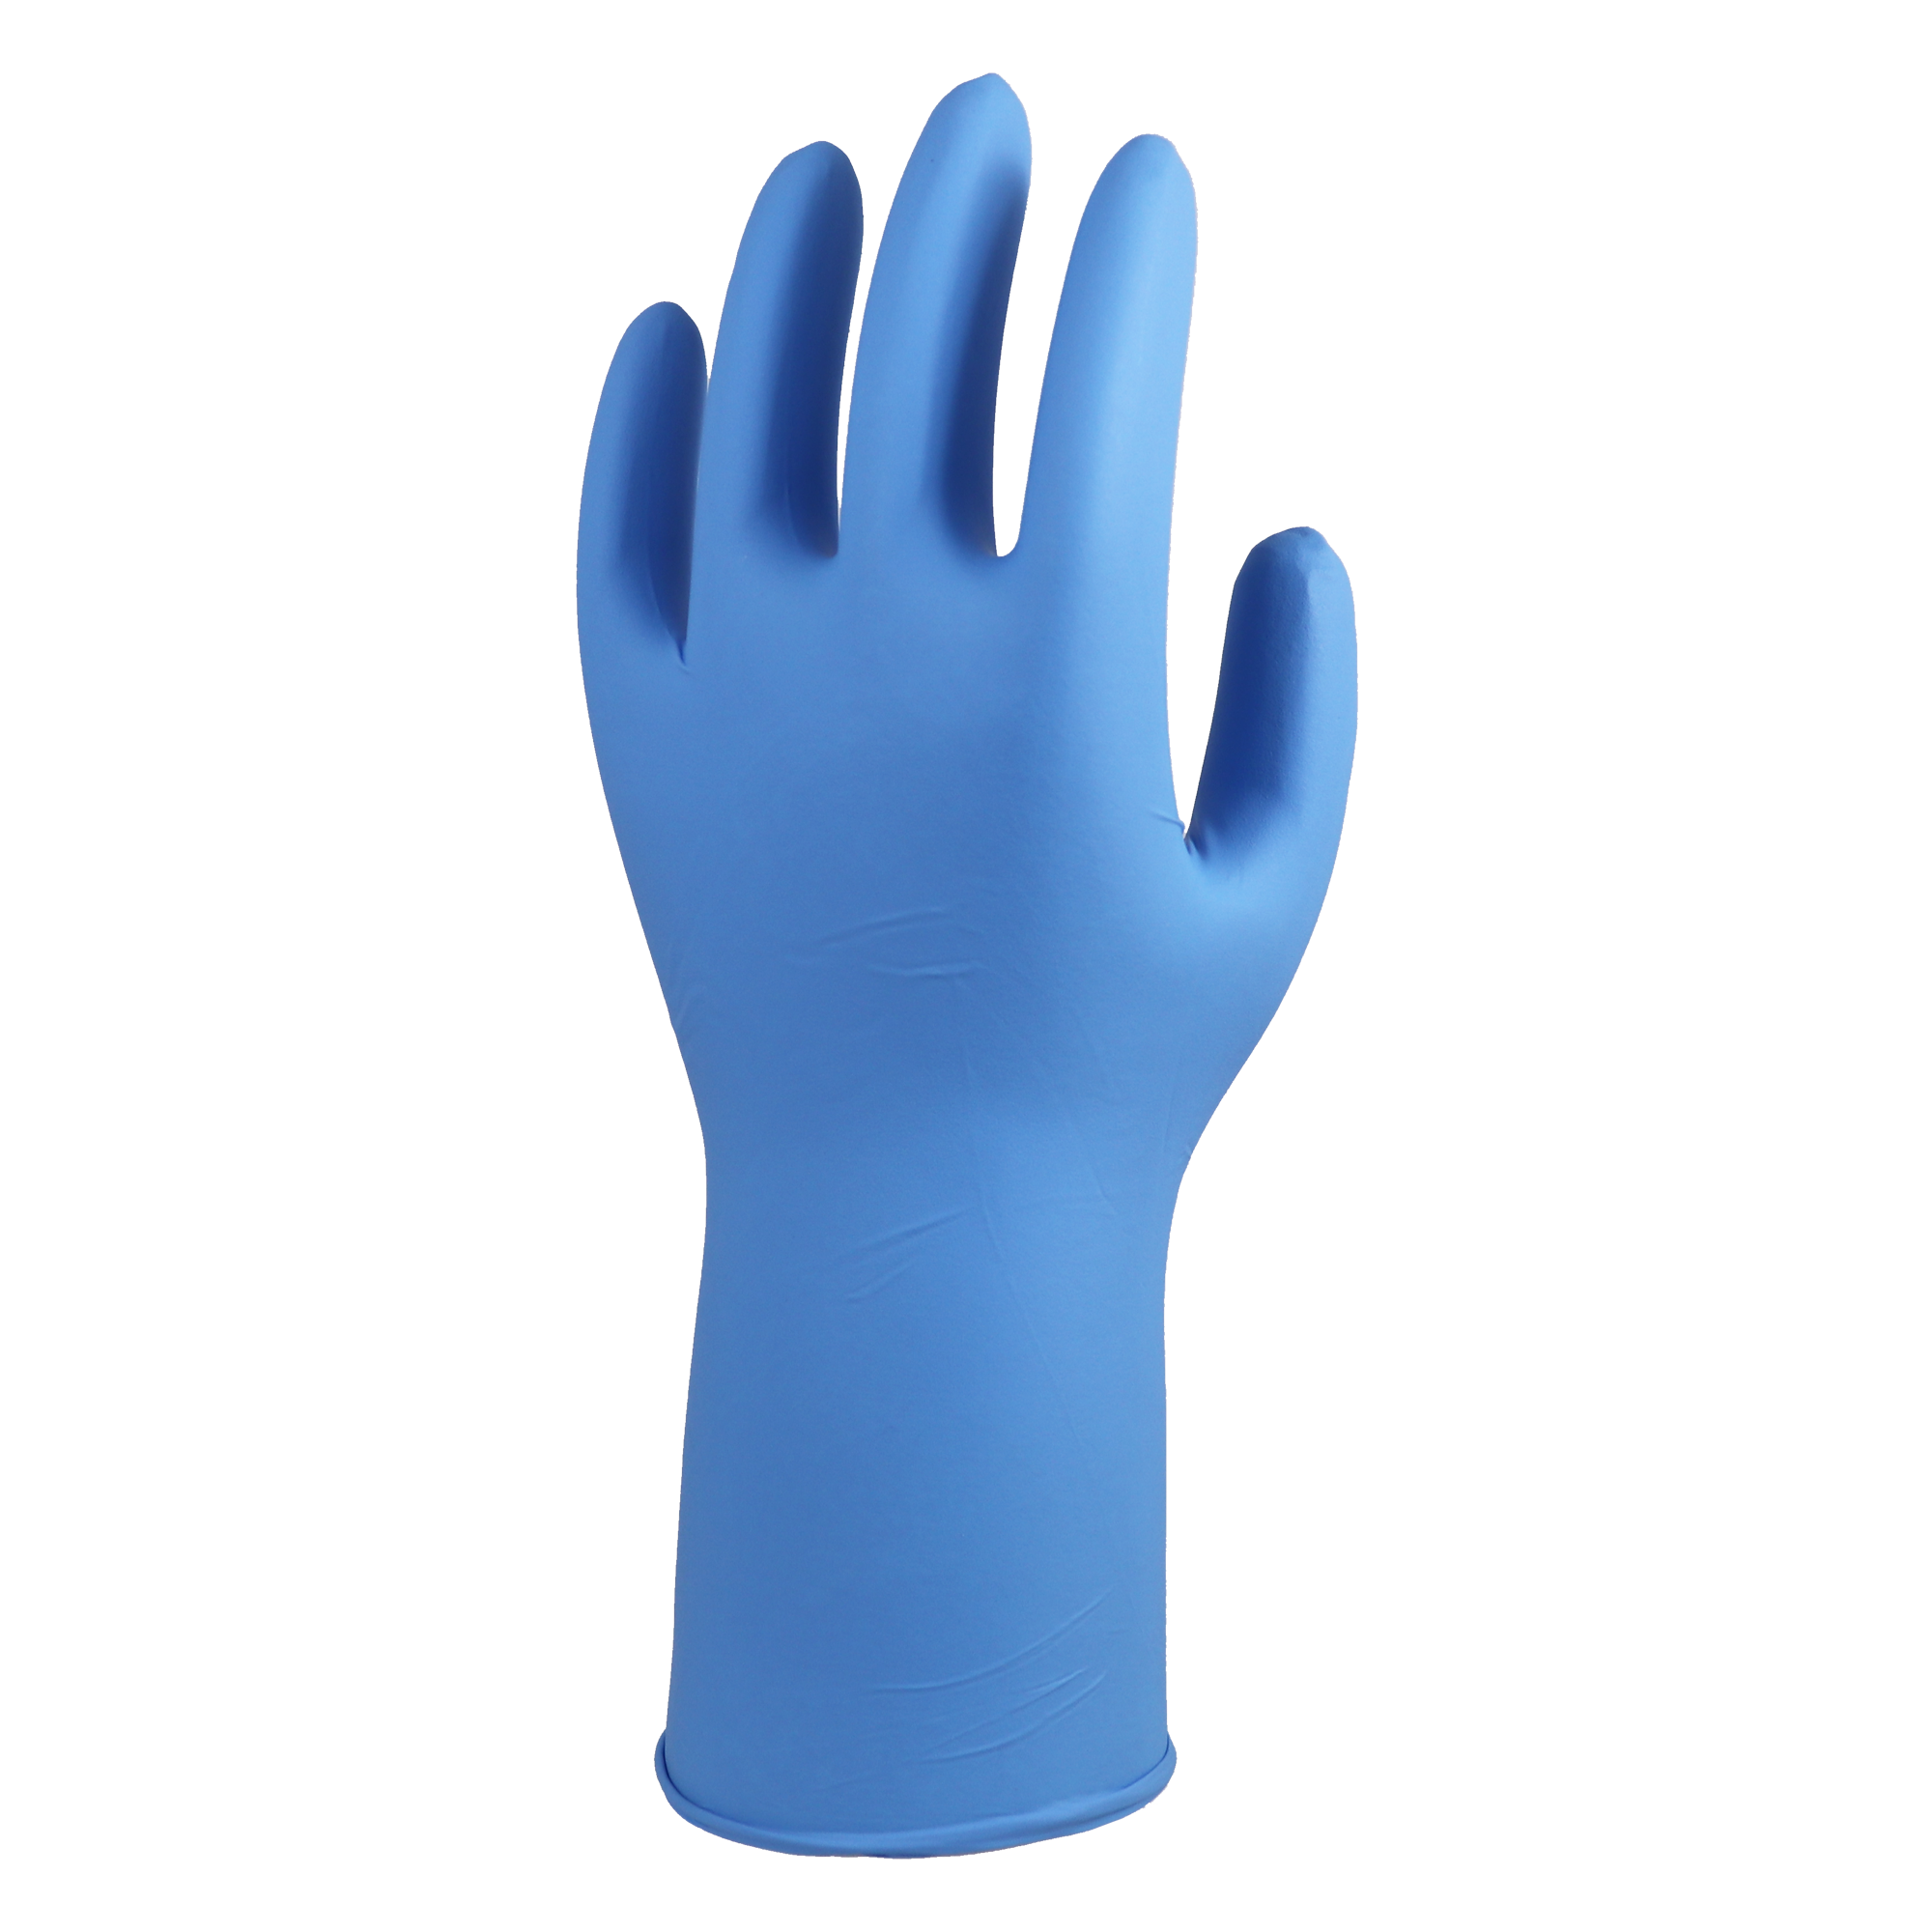 Lynn River - Heavy Duty Nitrile Gloves